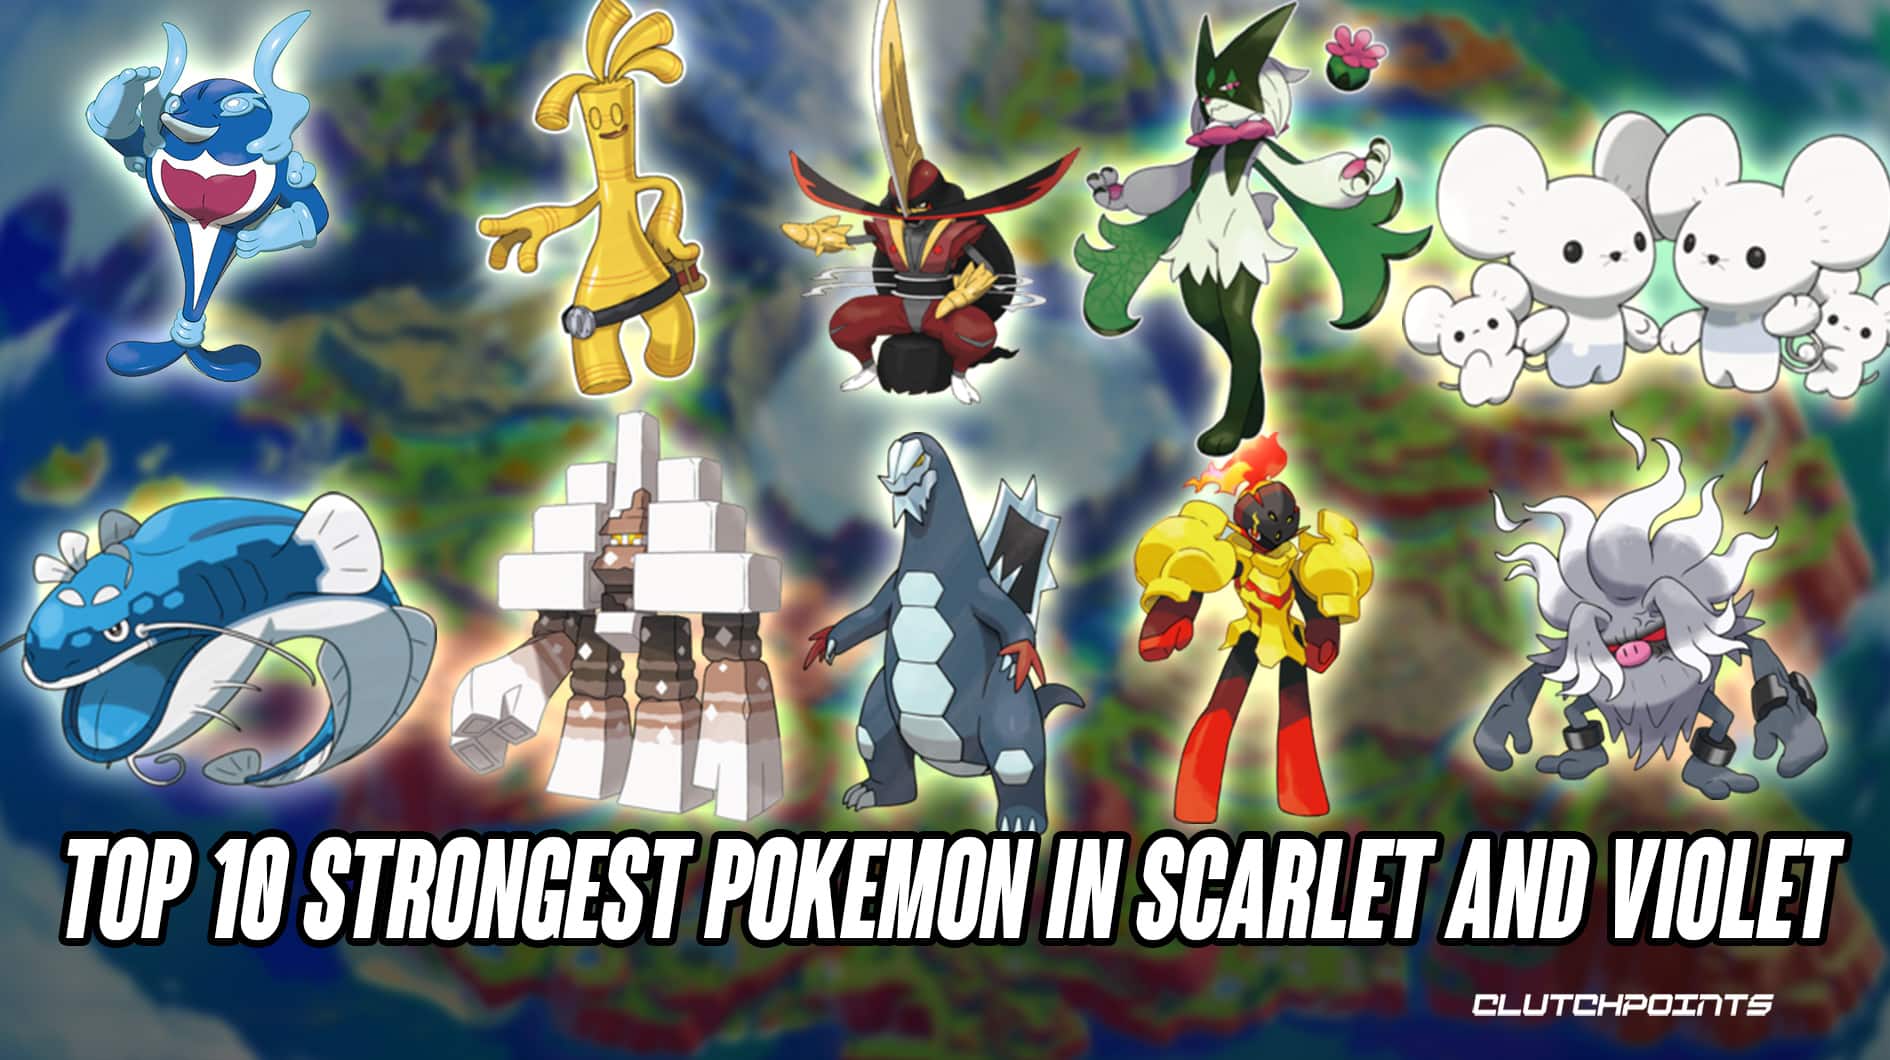 All NEW GEN 8 & 9 Pokémon Locations!!